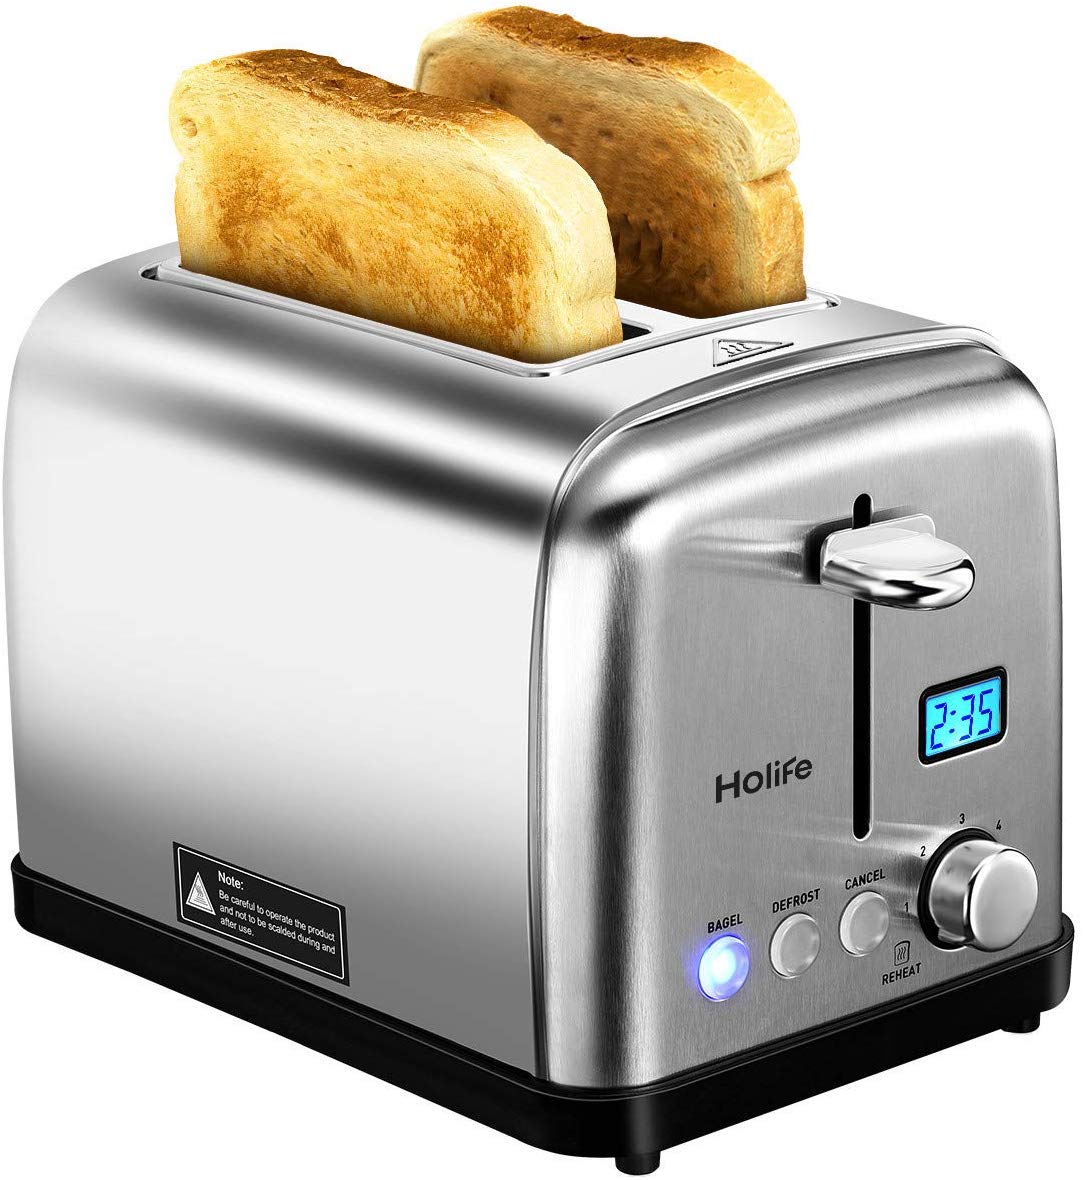 Тостер валберис. Saturn IBREAD тостер. Irit тостер ir-5103 тостер. Тостер Smeg с хлебом. Тостер 5kmt221e.